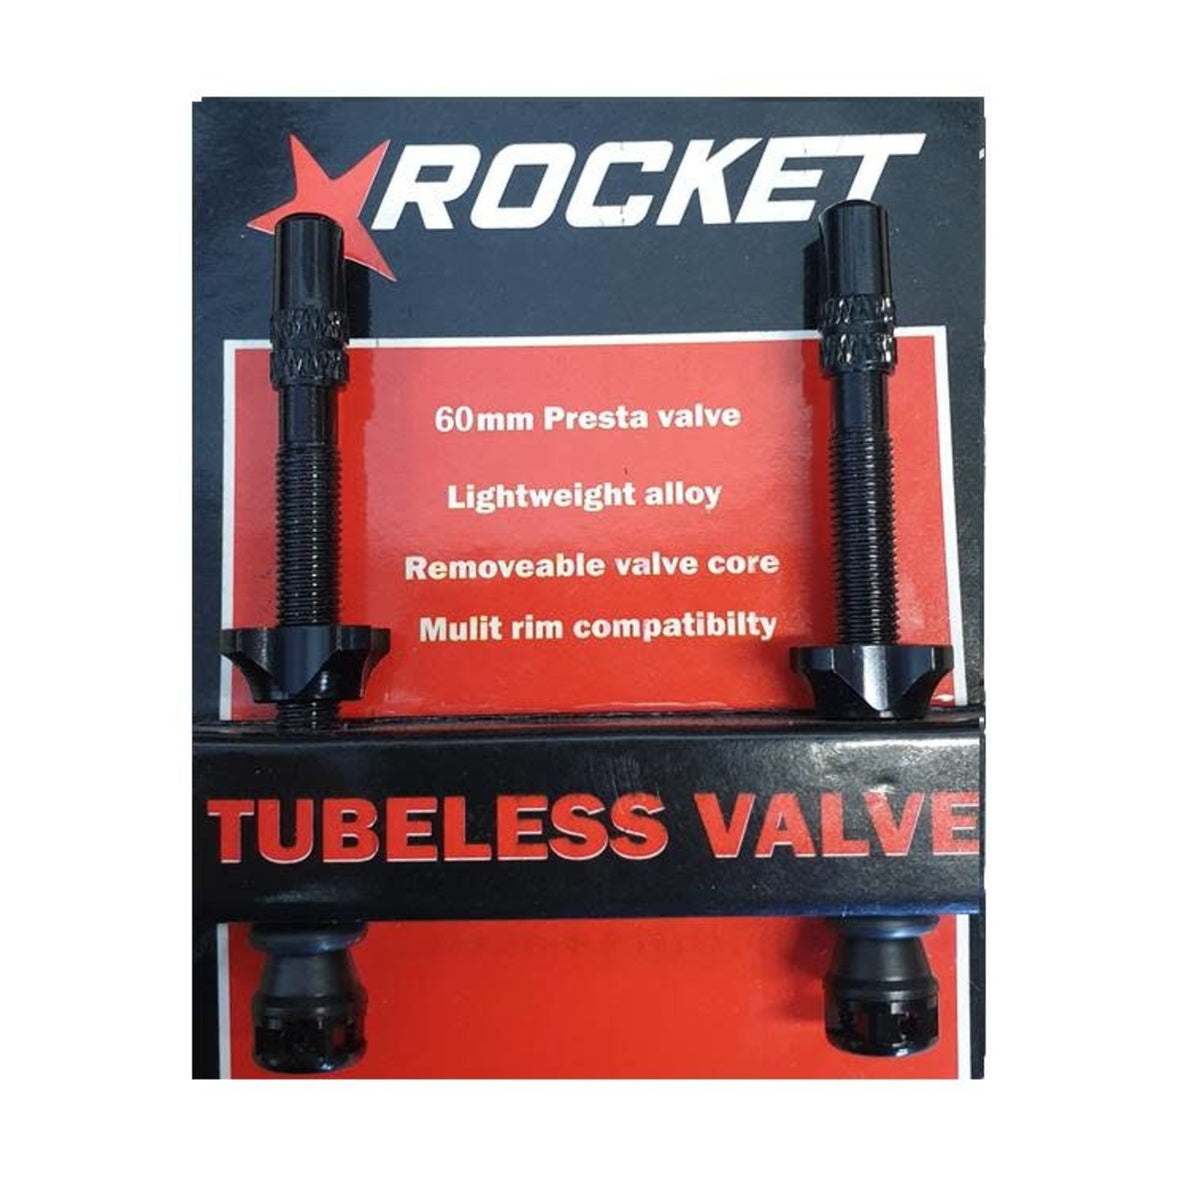 Rocket Tubeless Valve Set 60mm Presta Black